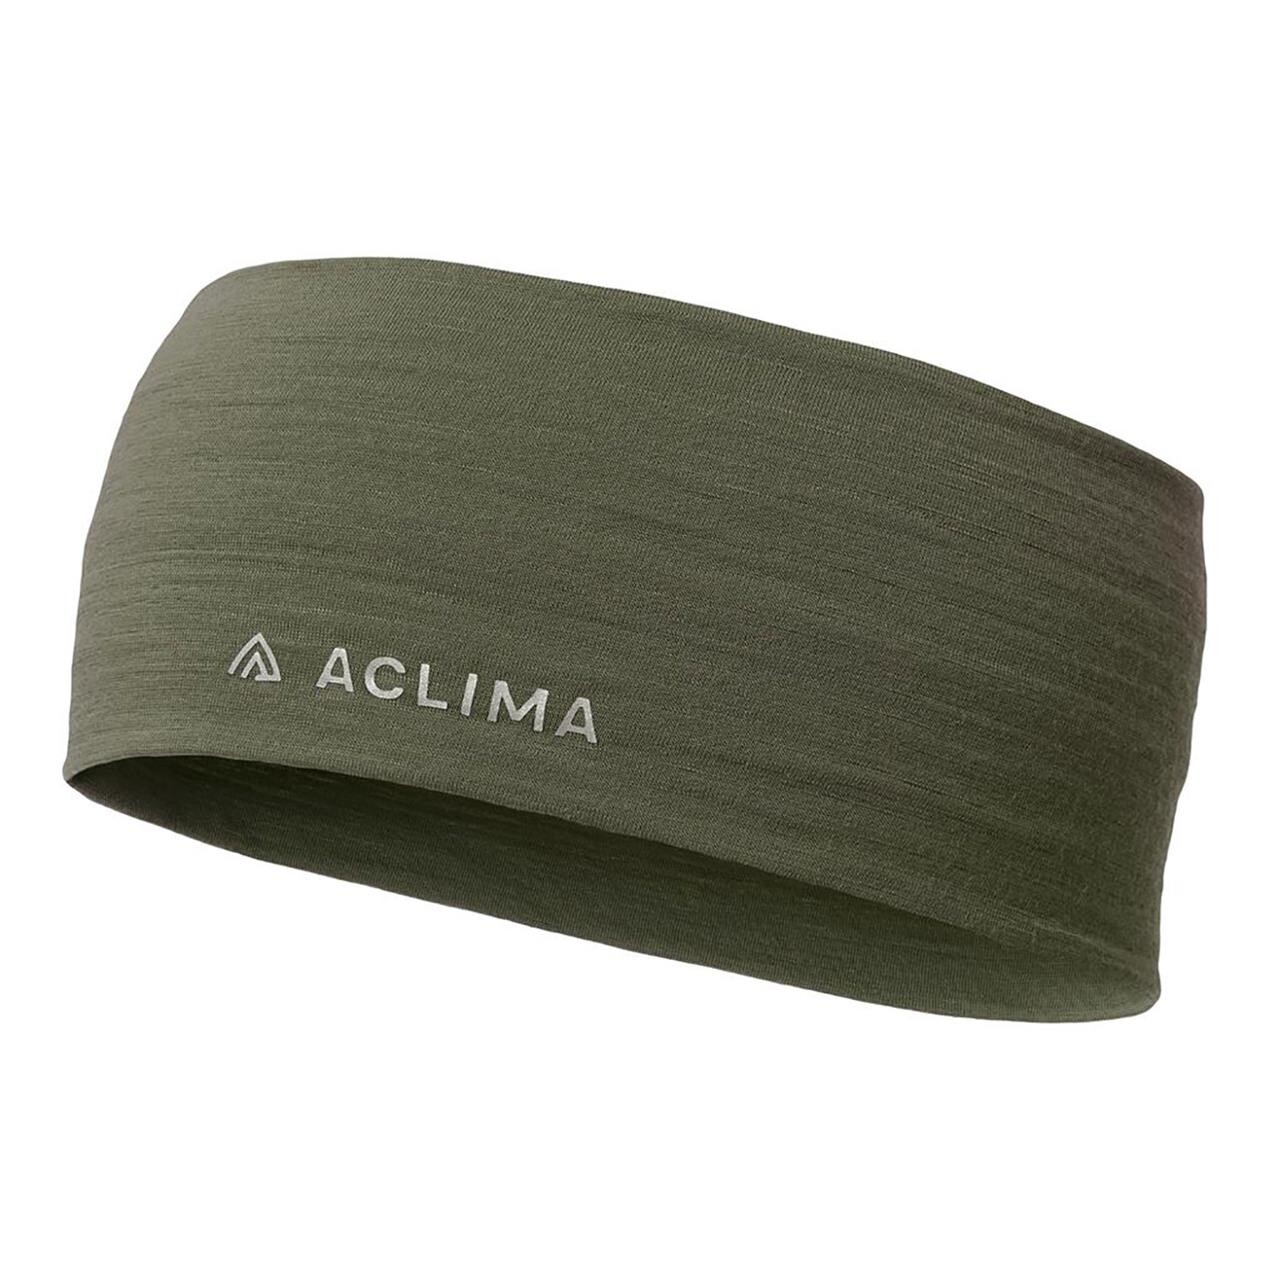 Se Aclima Lightwool Headband (Grøn (RANGER GREEN) Medium) hos Friluftsland.dk